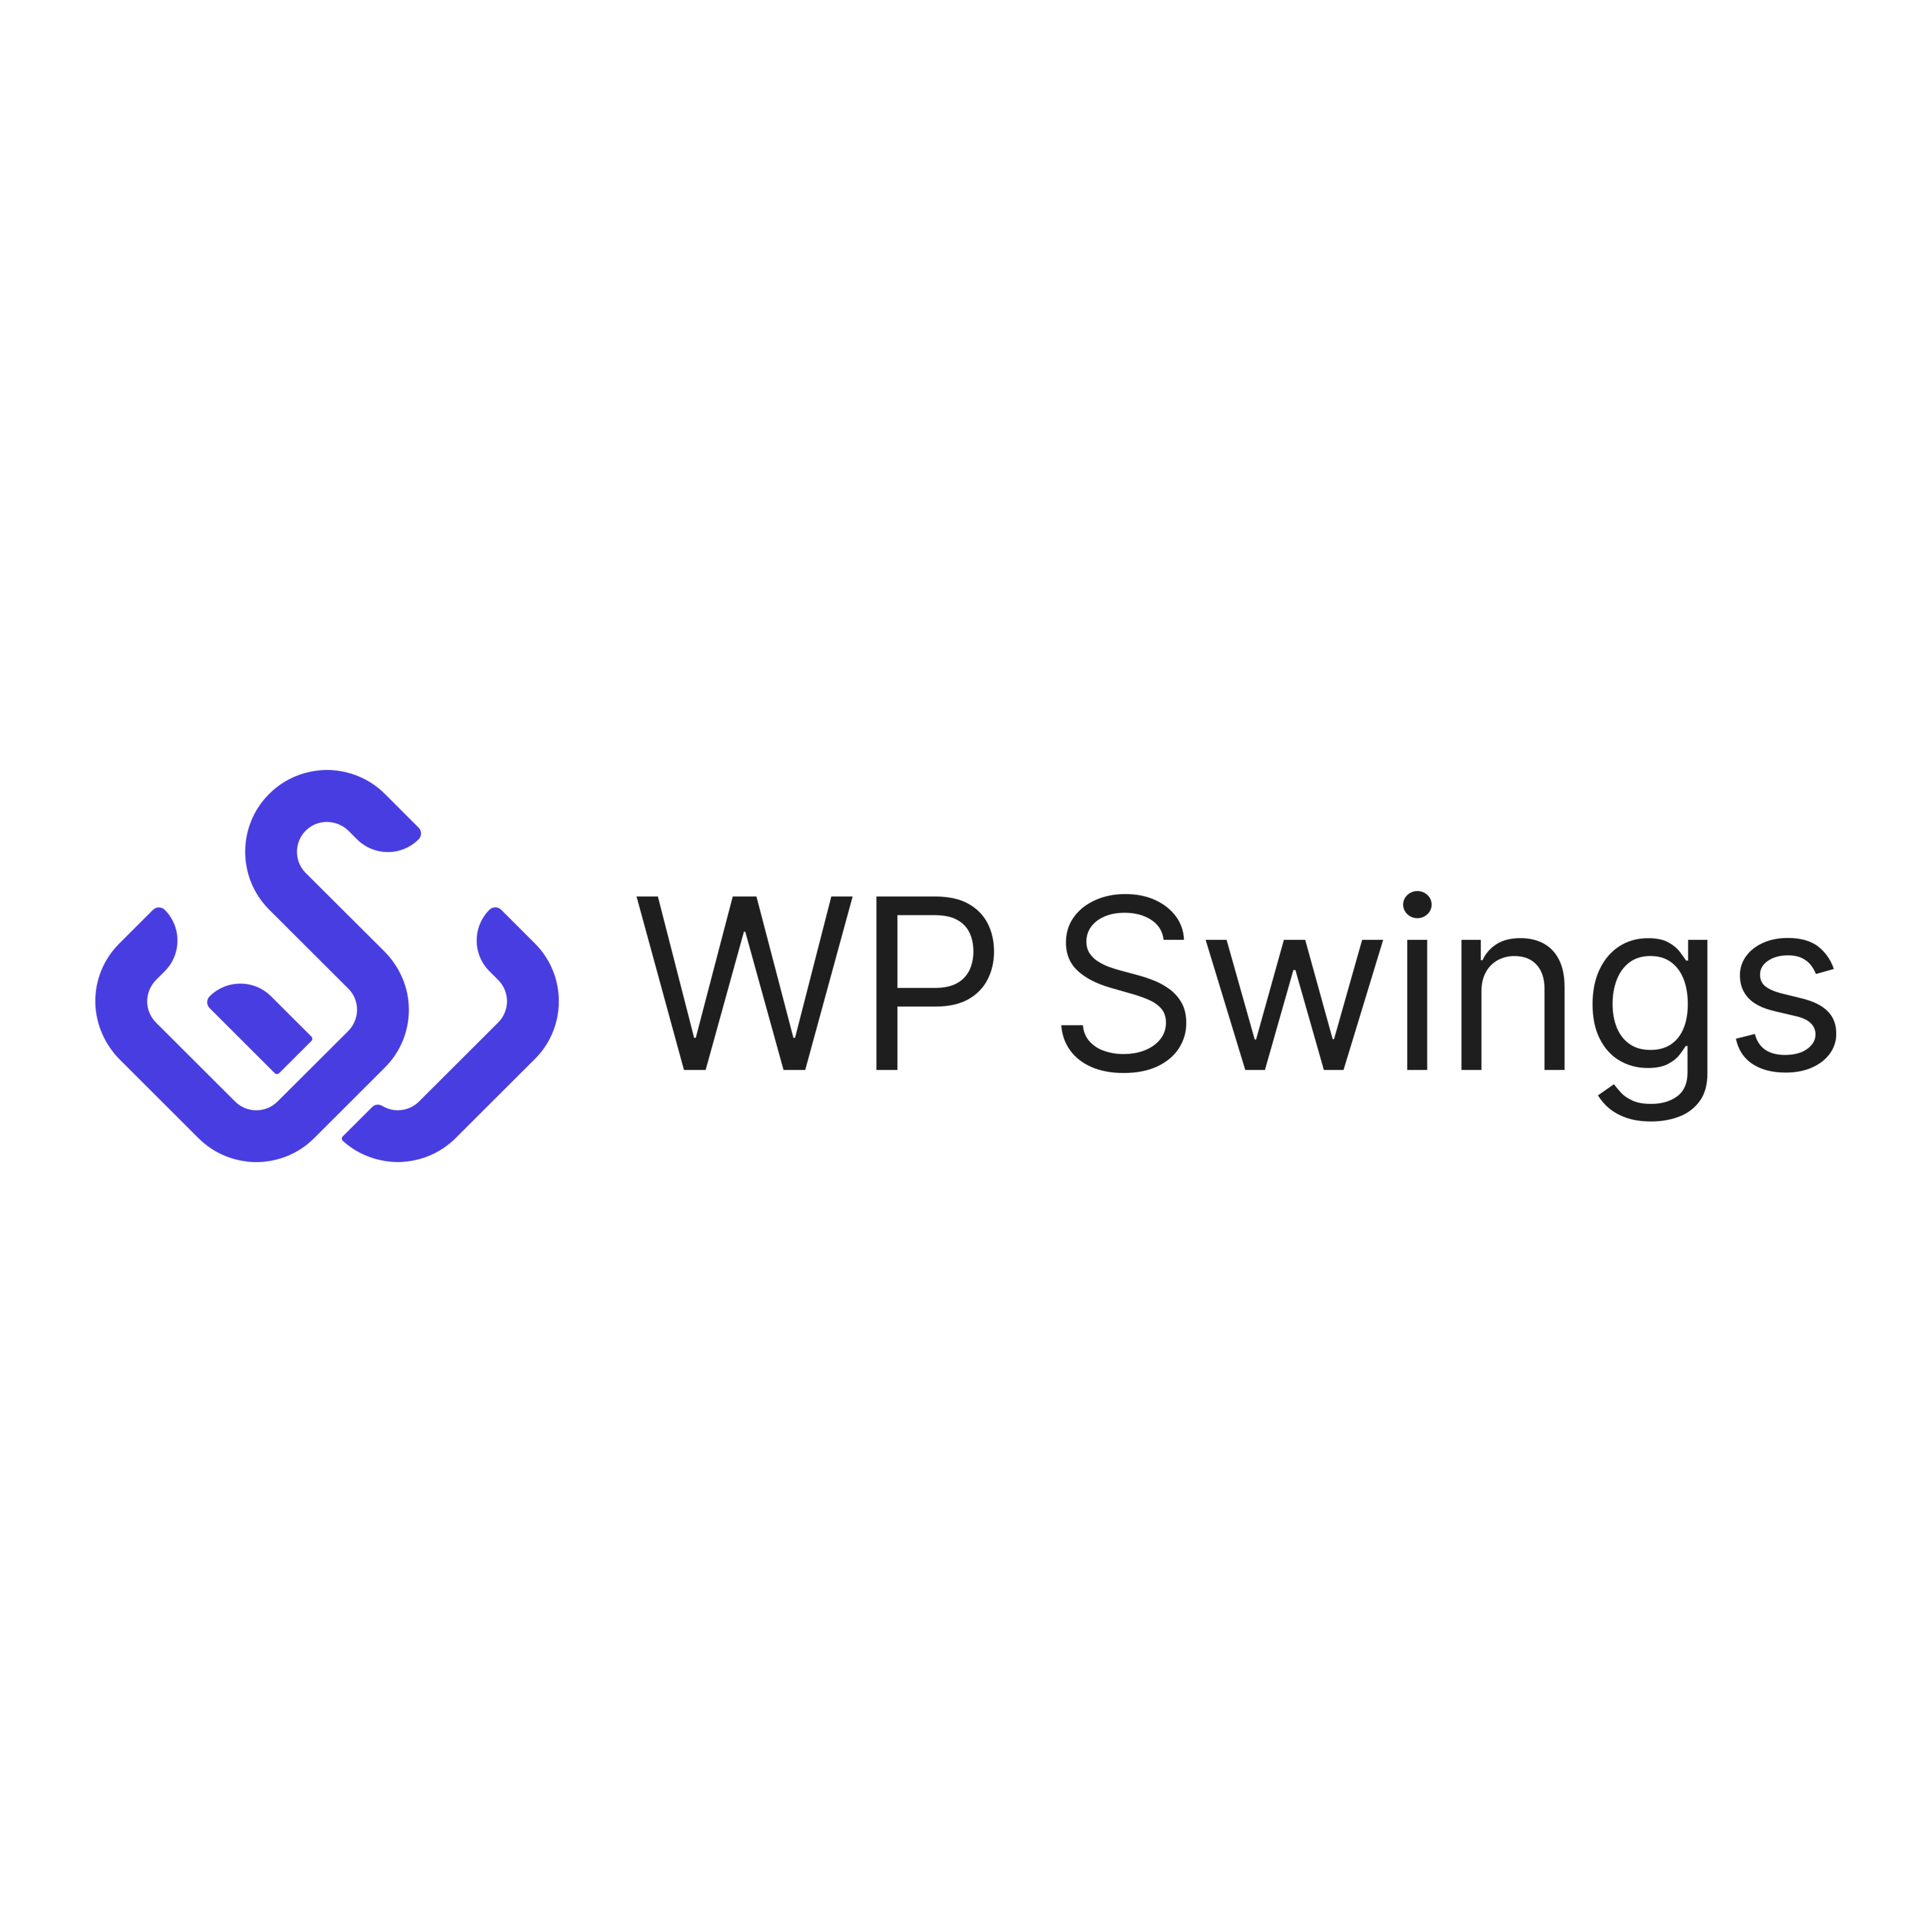 WP Swings logo